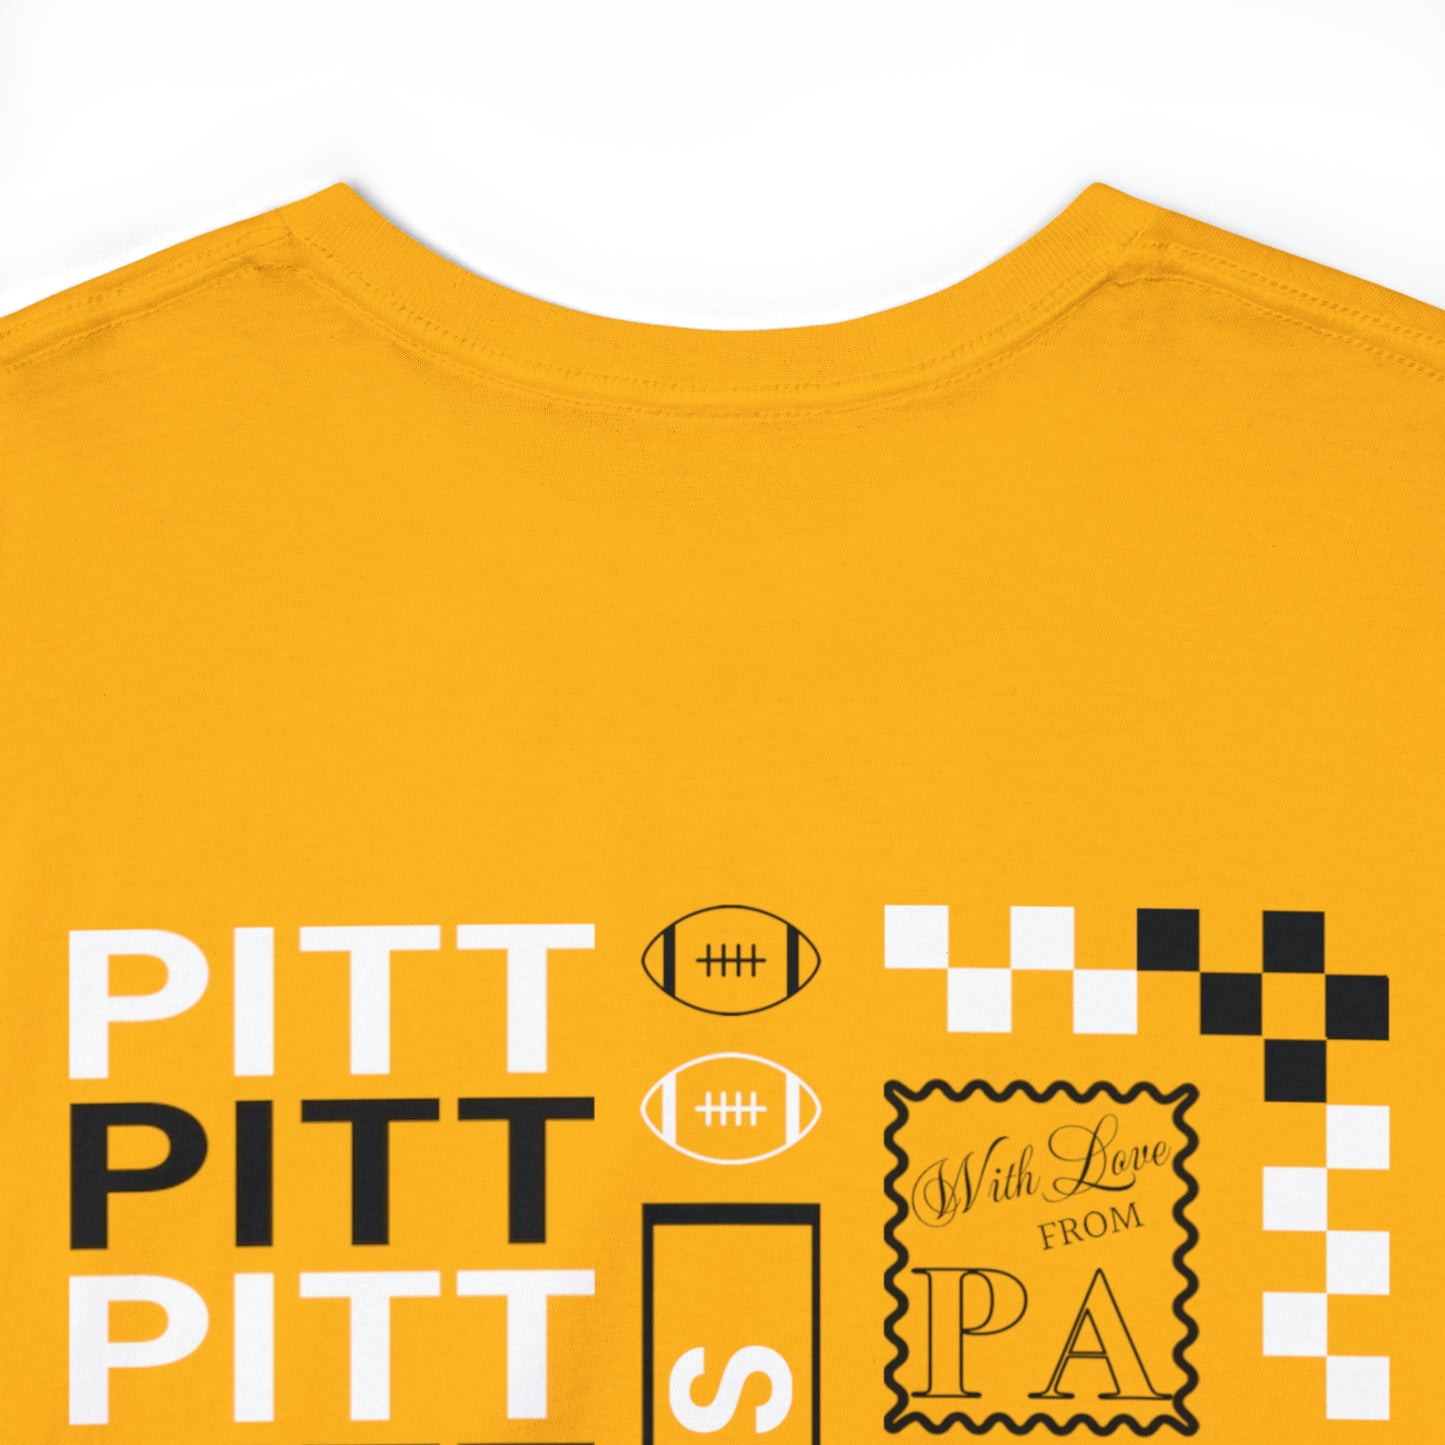 Pittsburgh Steelers Tshirt